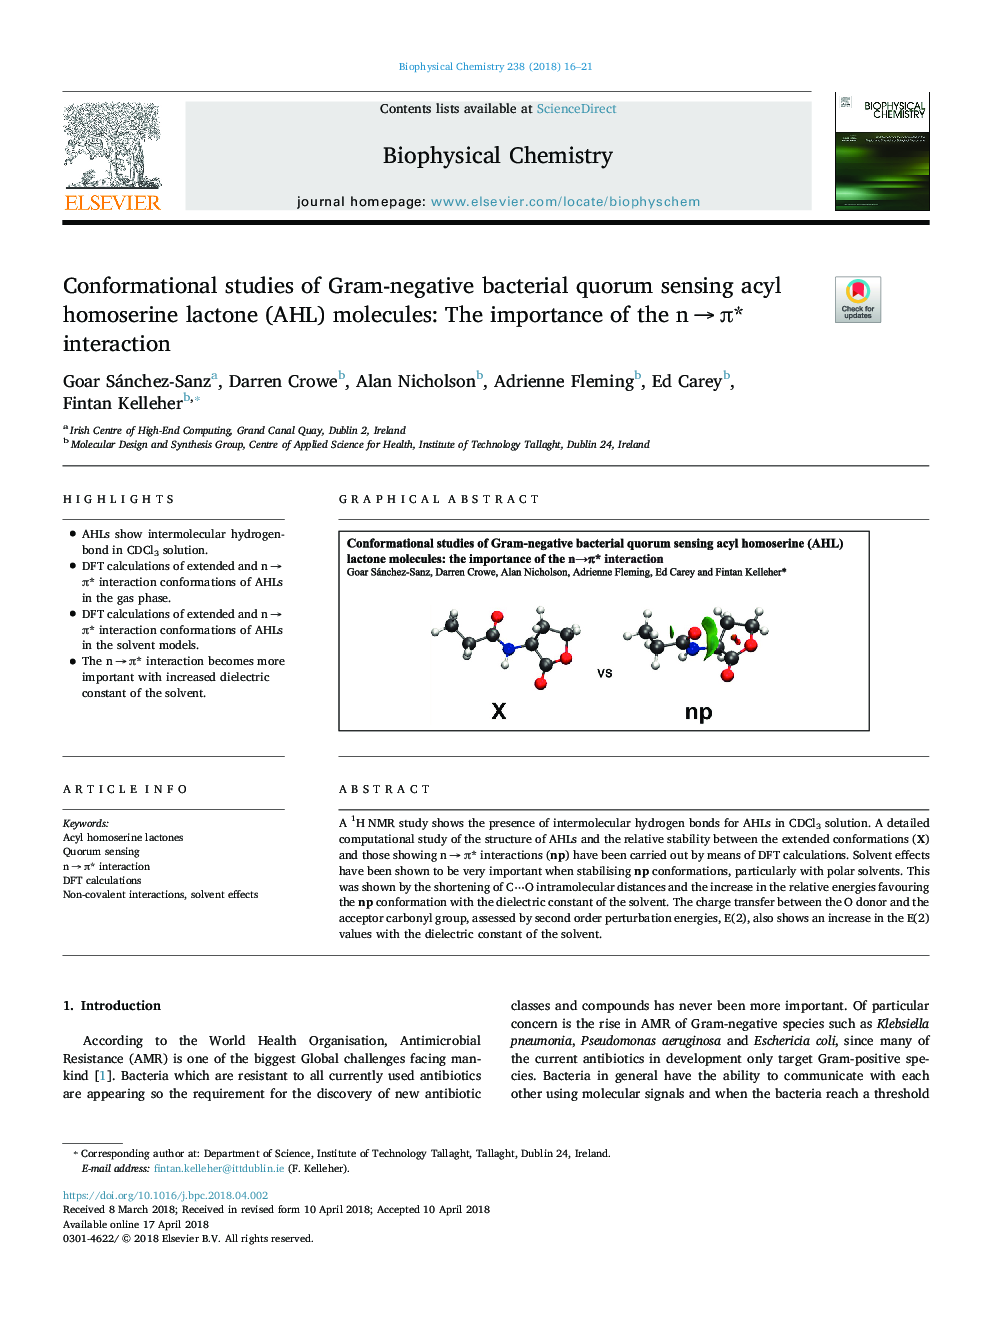 Conformational studies of Gram-negative bacterial quorum sensing acyl homoserine lactone (AHL) molecules: The importance of the nâ¯ââ¯Ï* interaction